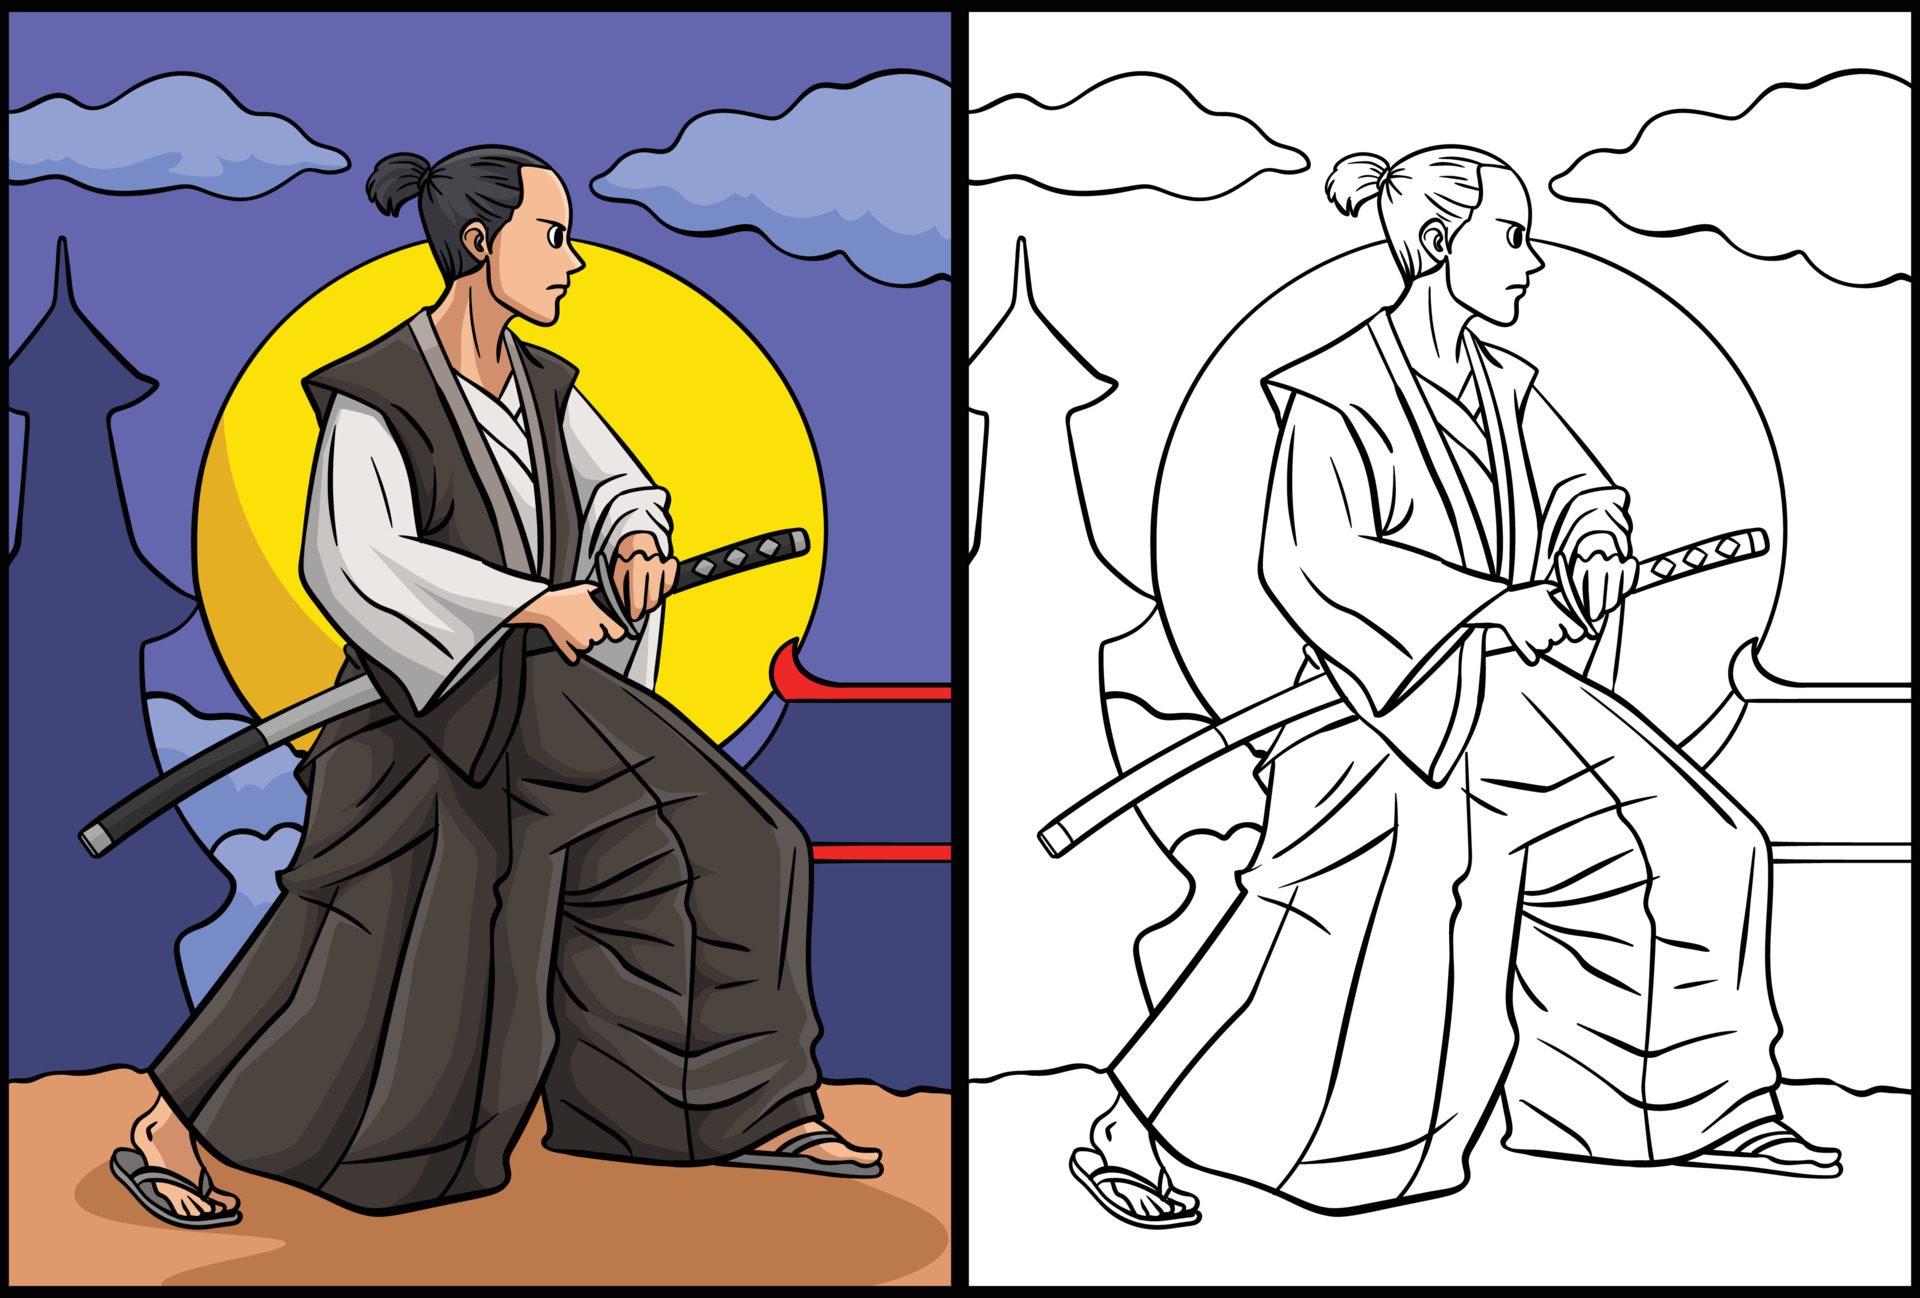 Samurai armor cartoon coloring page for kids 1844997 Vector Art at Vecteezy